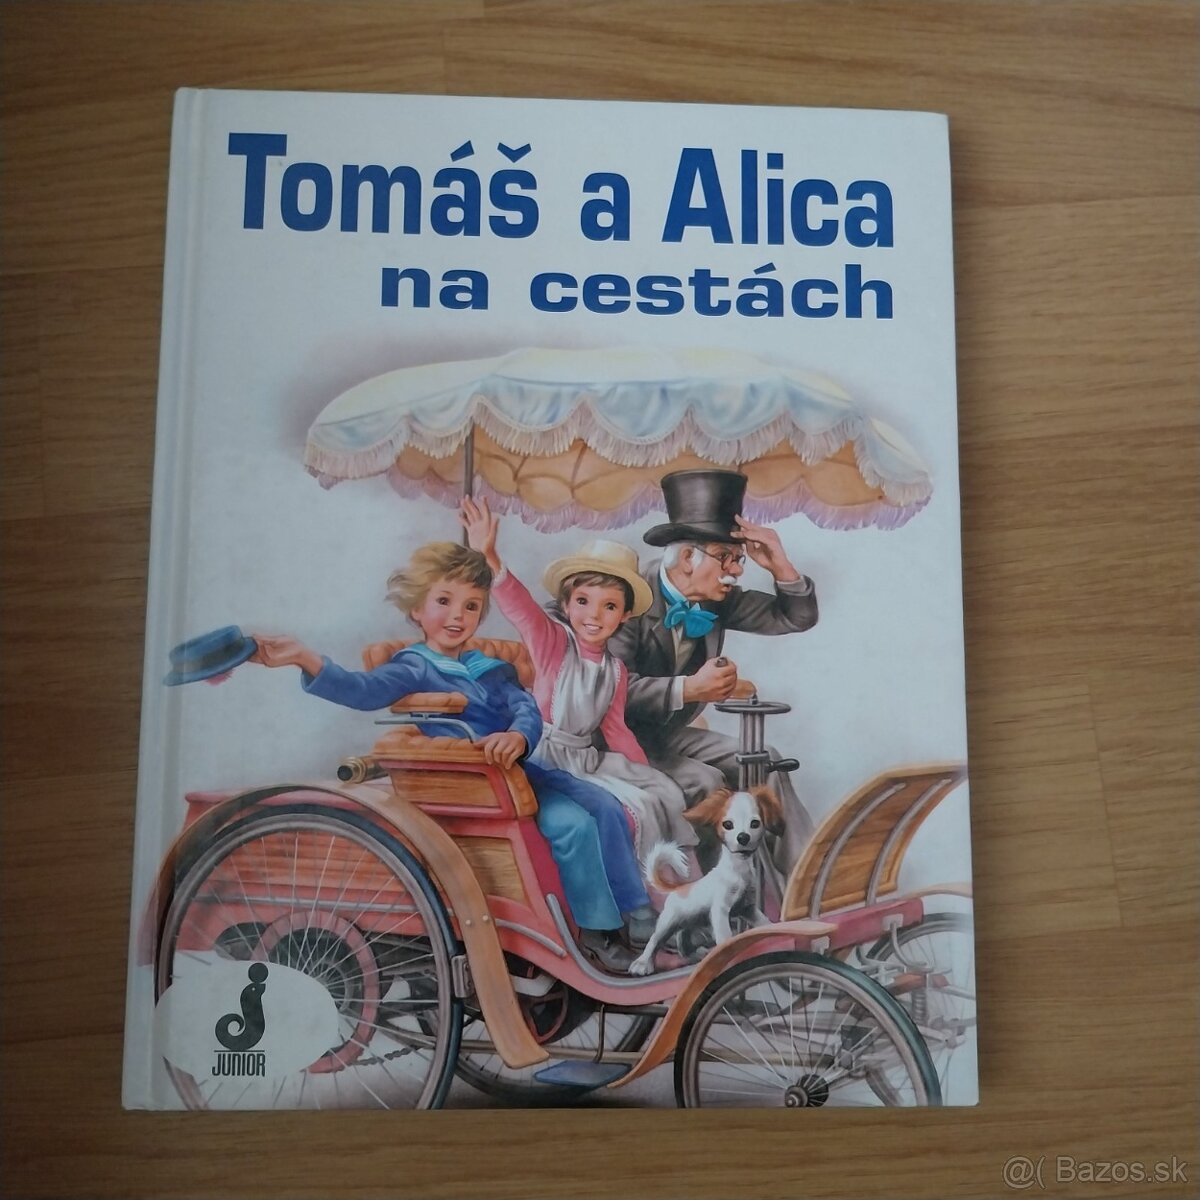 Tomas a Alica na cestach